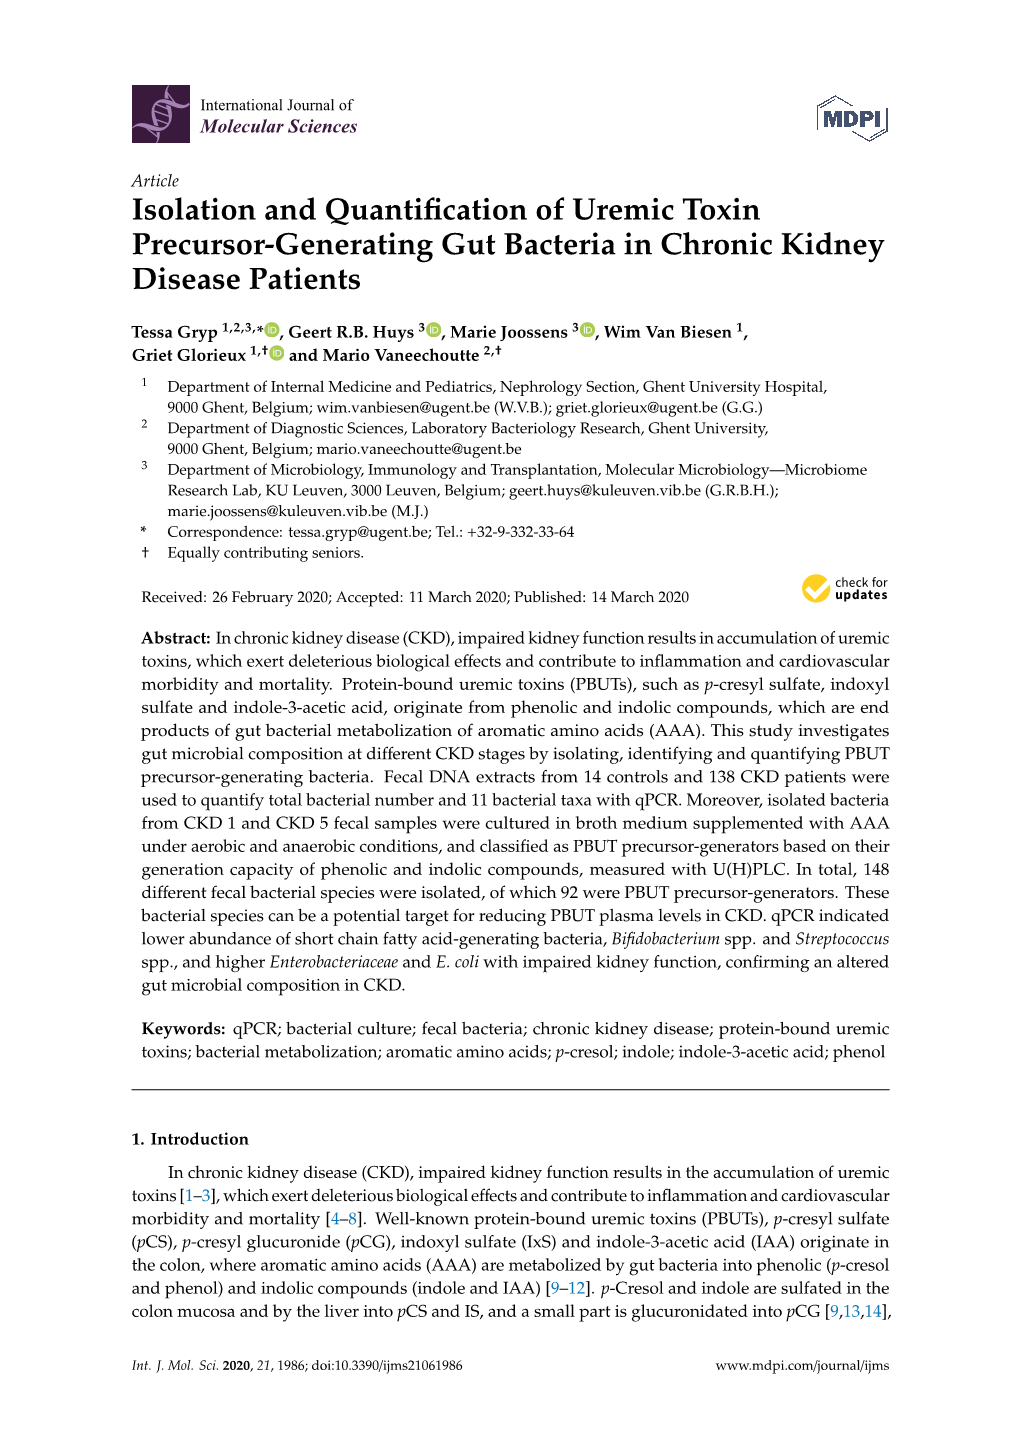 Isolation and Quantification of Uremic Toxin Precursor-Generating Gut